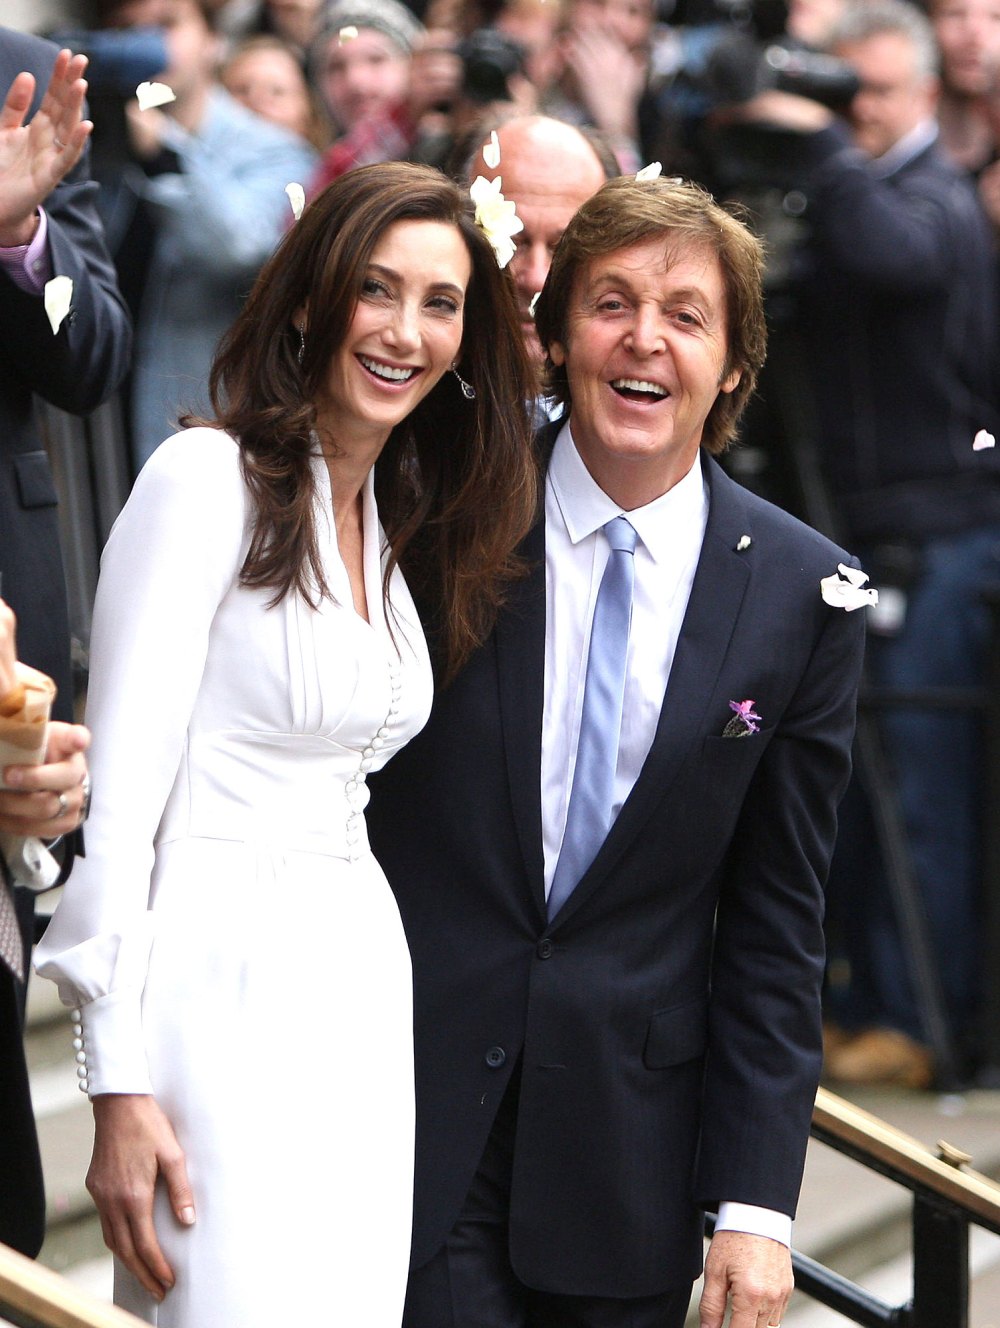 Paul McCartney Marries Nancy Shevell!